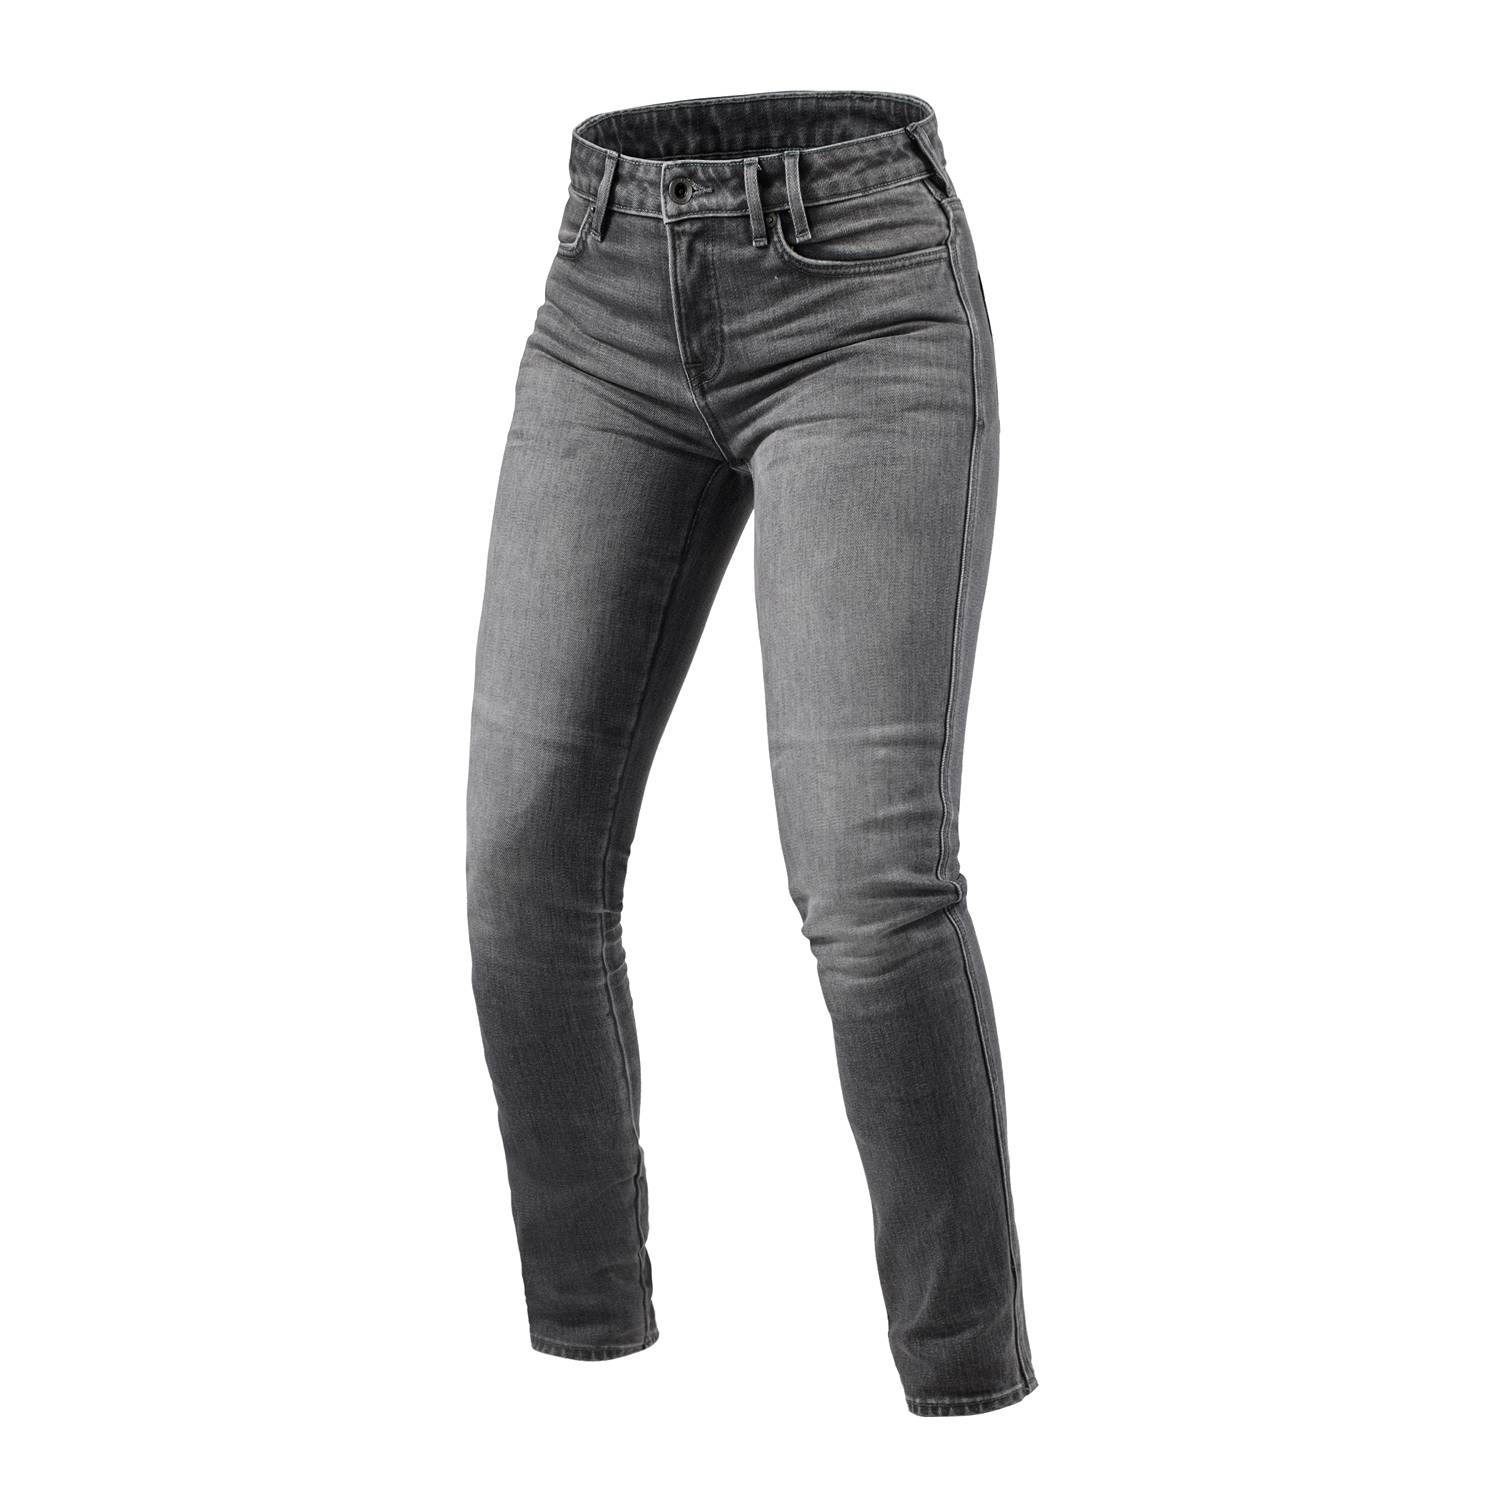 Image of REV'IT! Jeans Shelby 2 Ladies SK Medium Grey Stone L32 Size L32/W28 ID 8700001376624